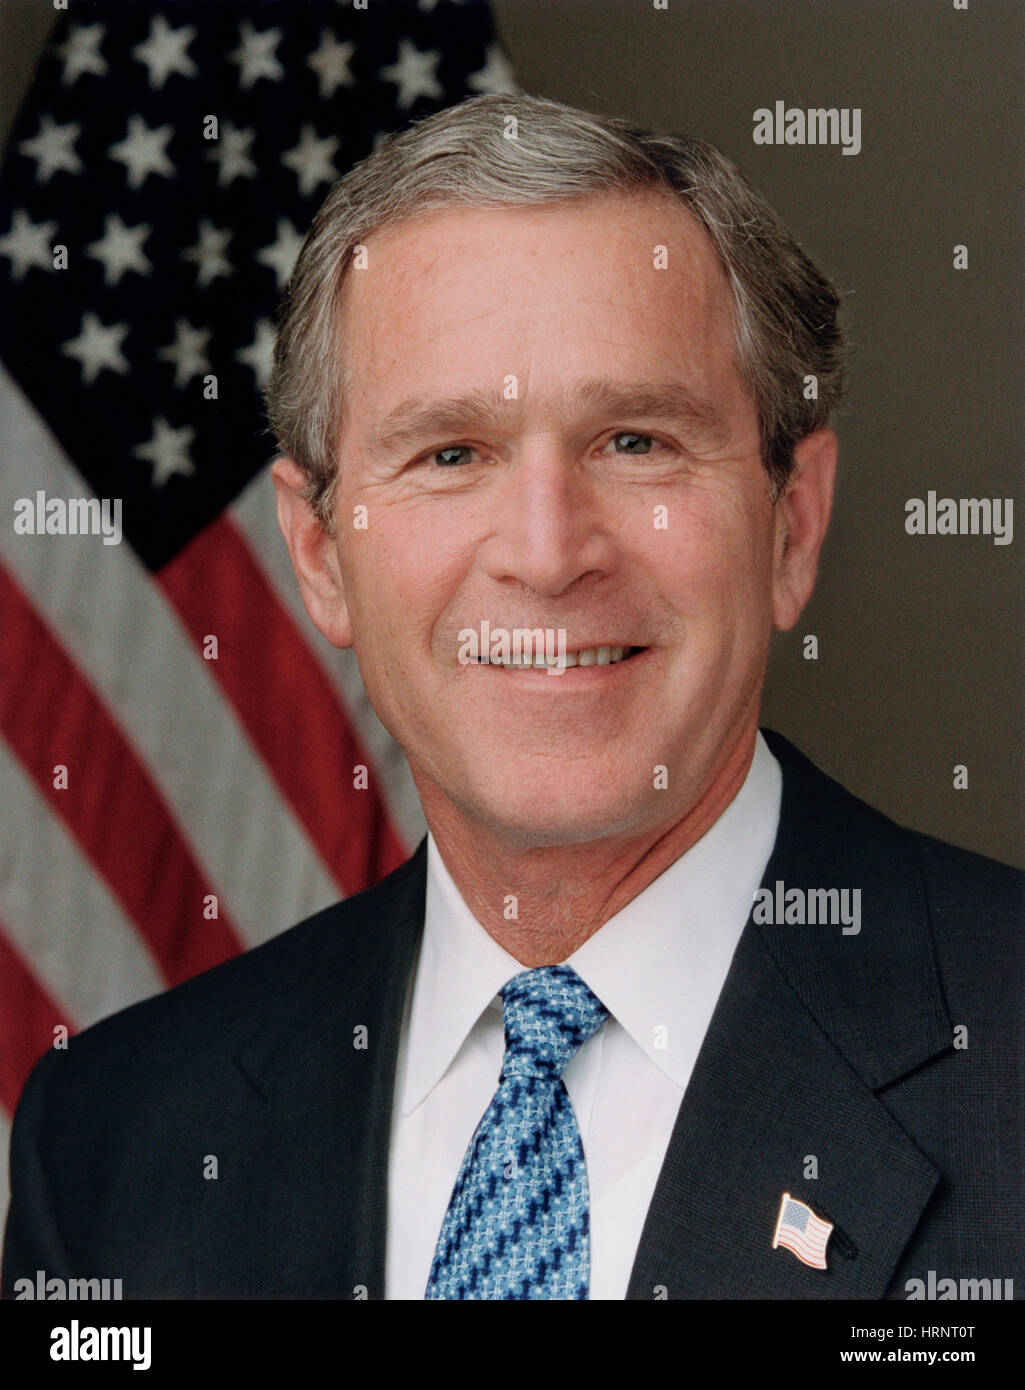 George W. Bush, 43rd U.S. President Stock Photo